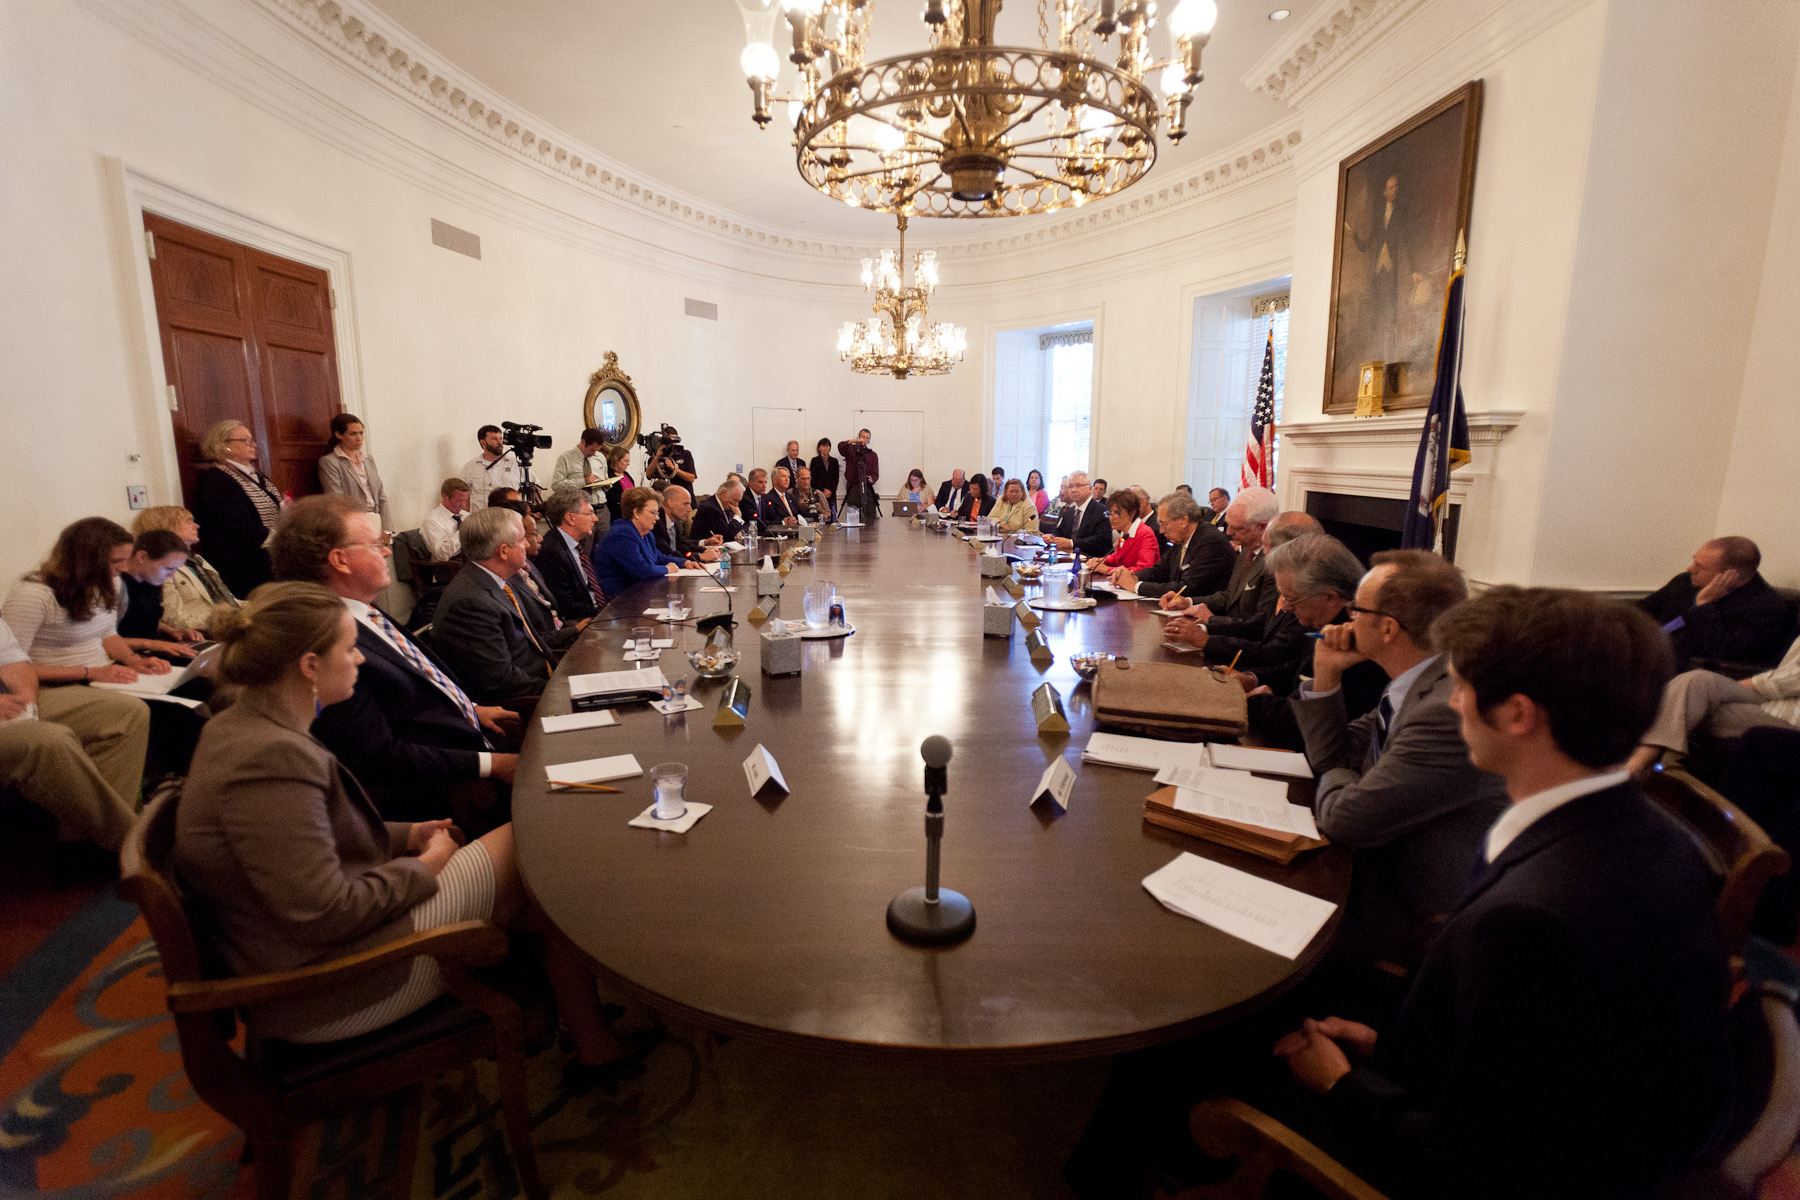 U.Va. Board of Visitors sitting at a round table